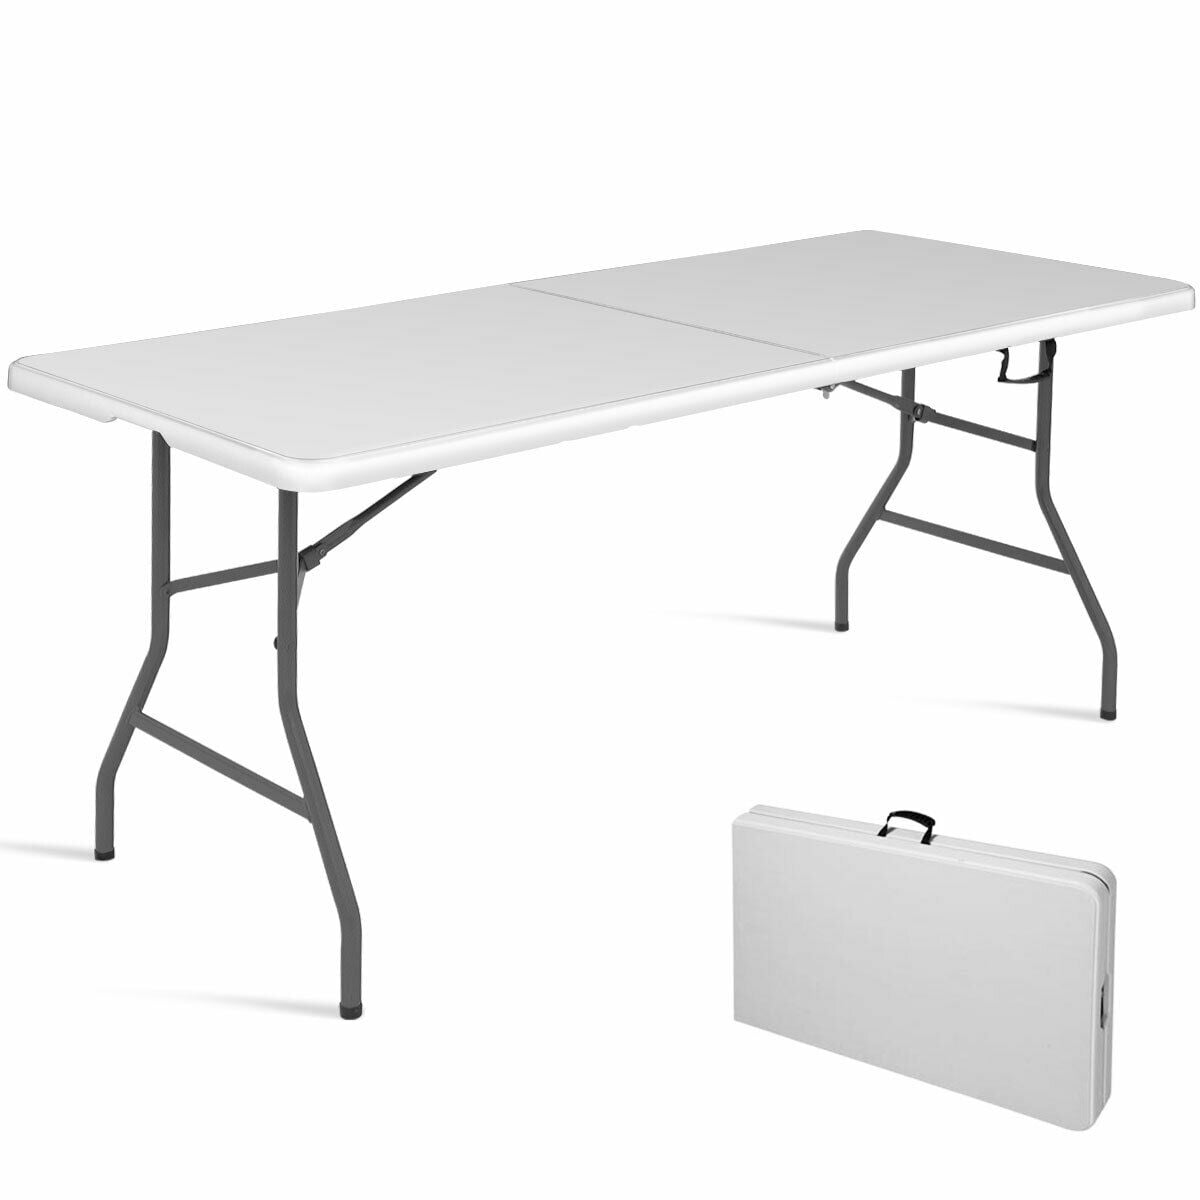 6 Folding Table Portable Plastic Indoor Outdoor Picnic Party Dining Camp Tables Walmart Com Walmart Com